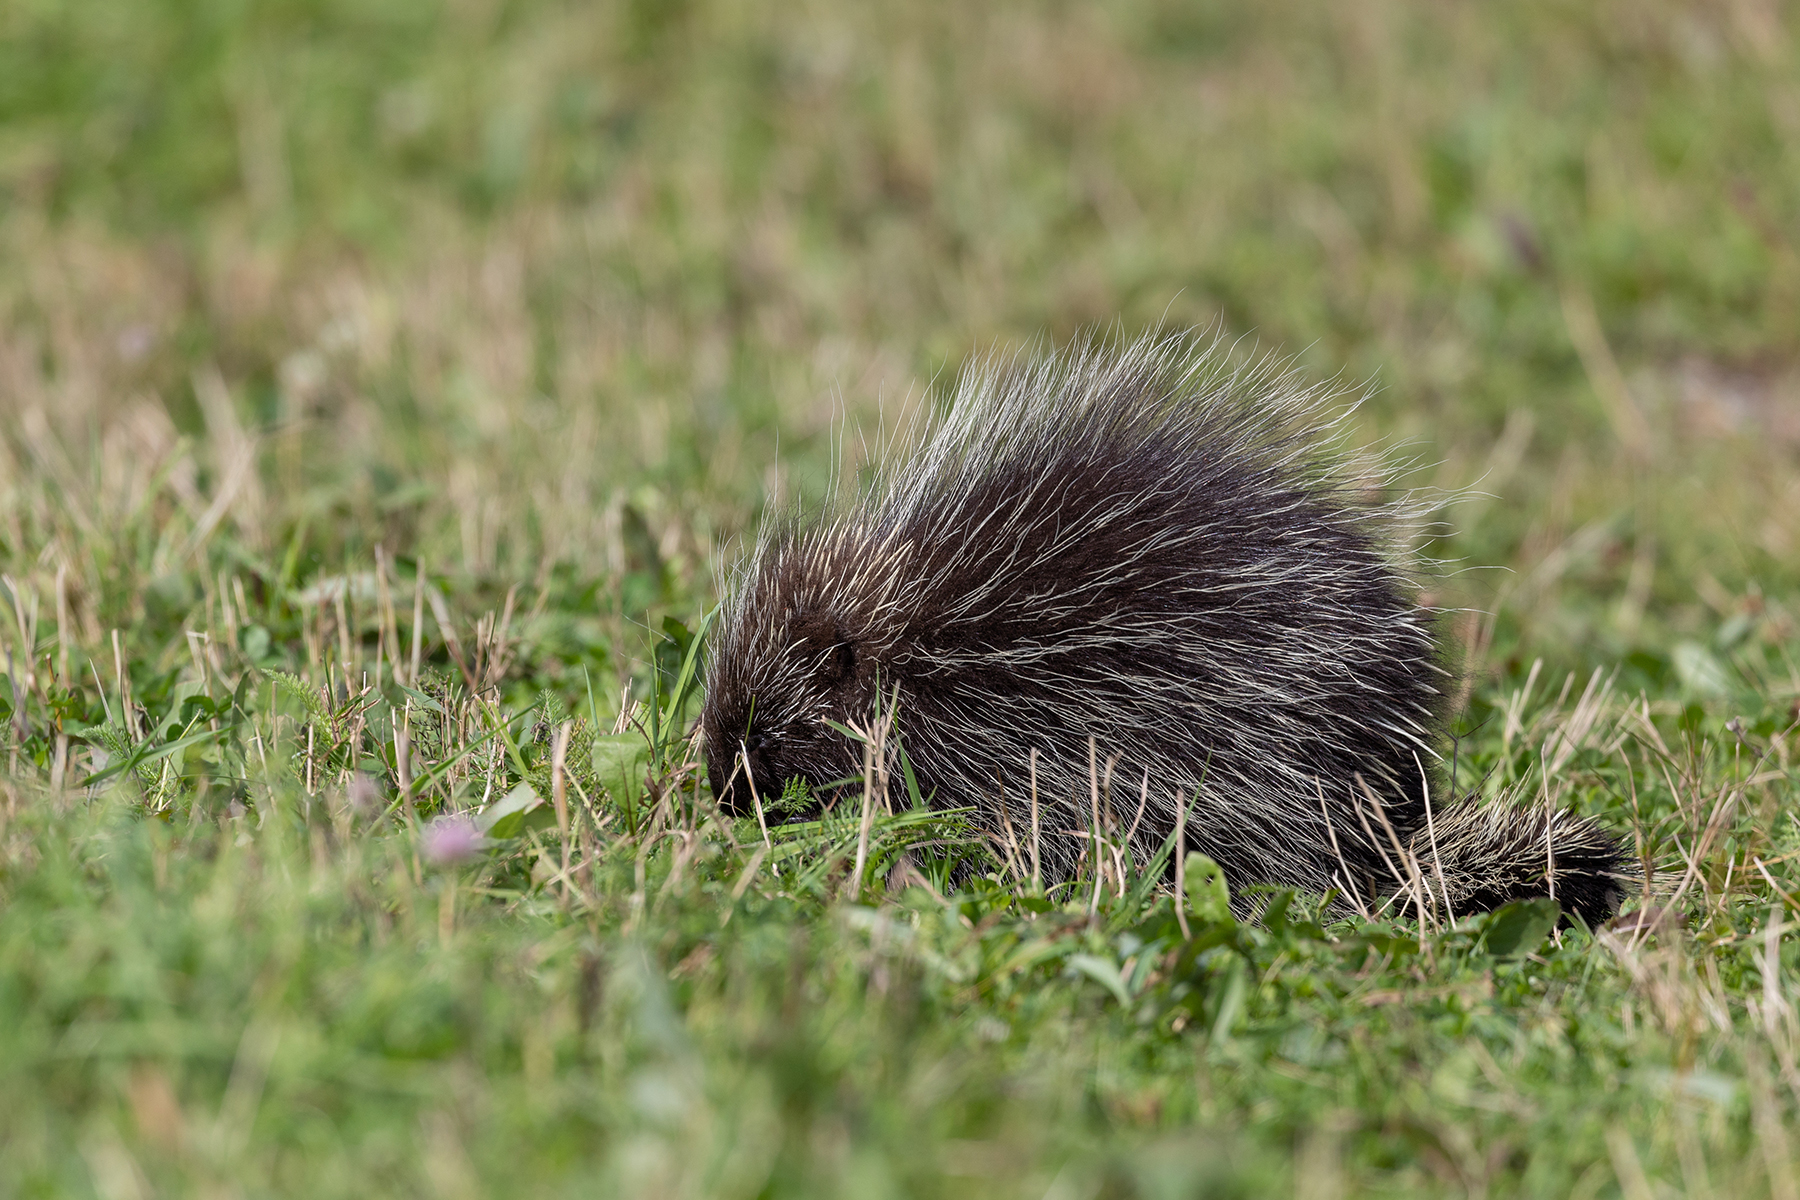 Porcupine in a grassy field